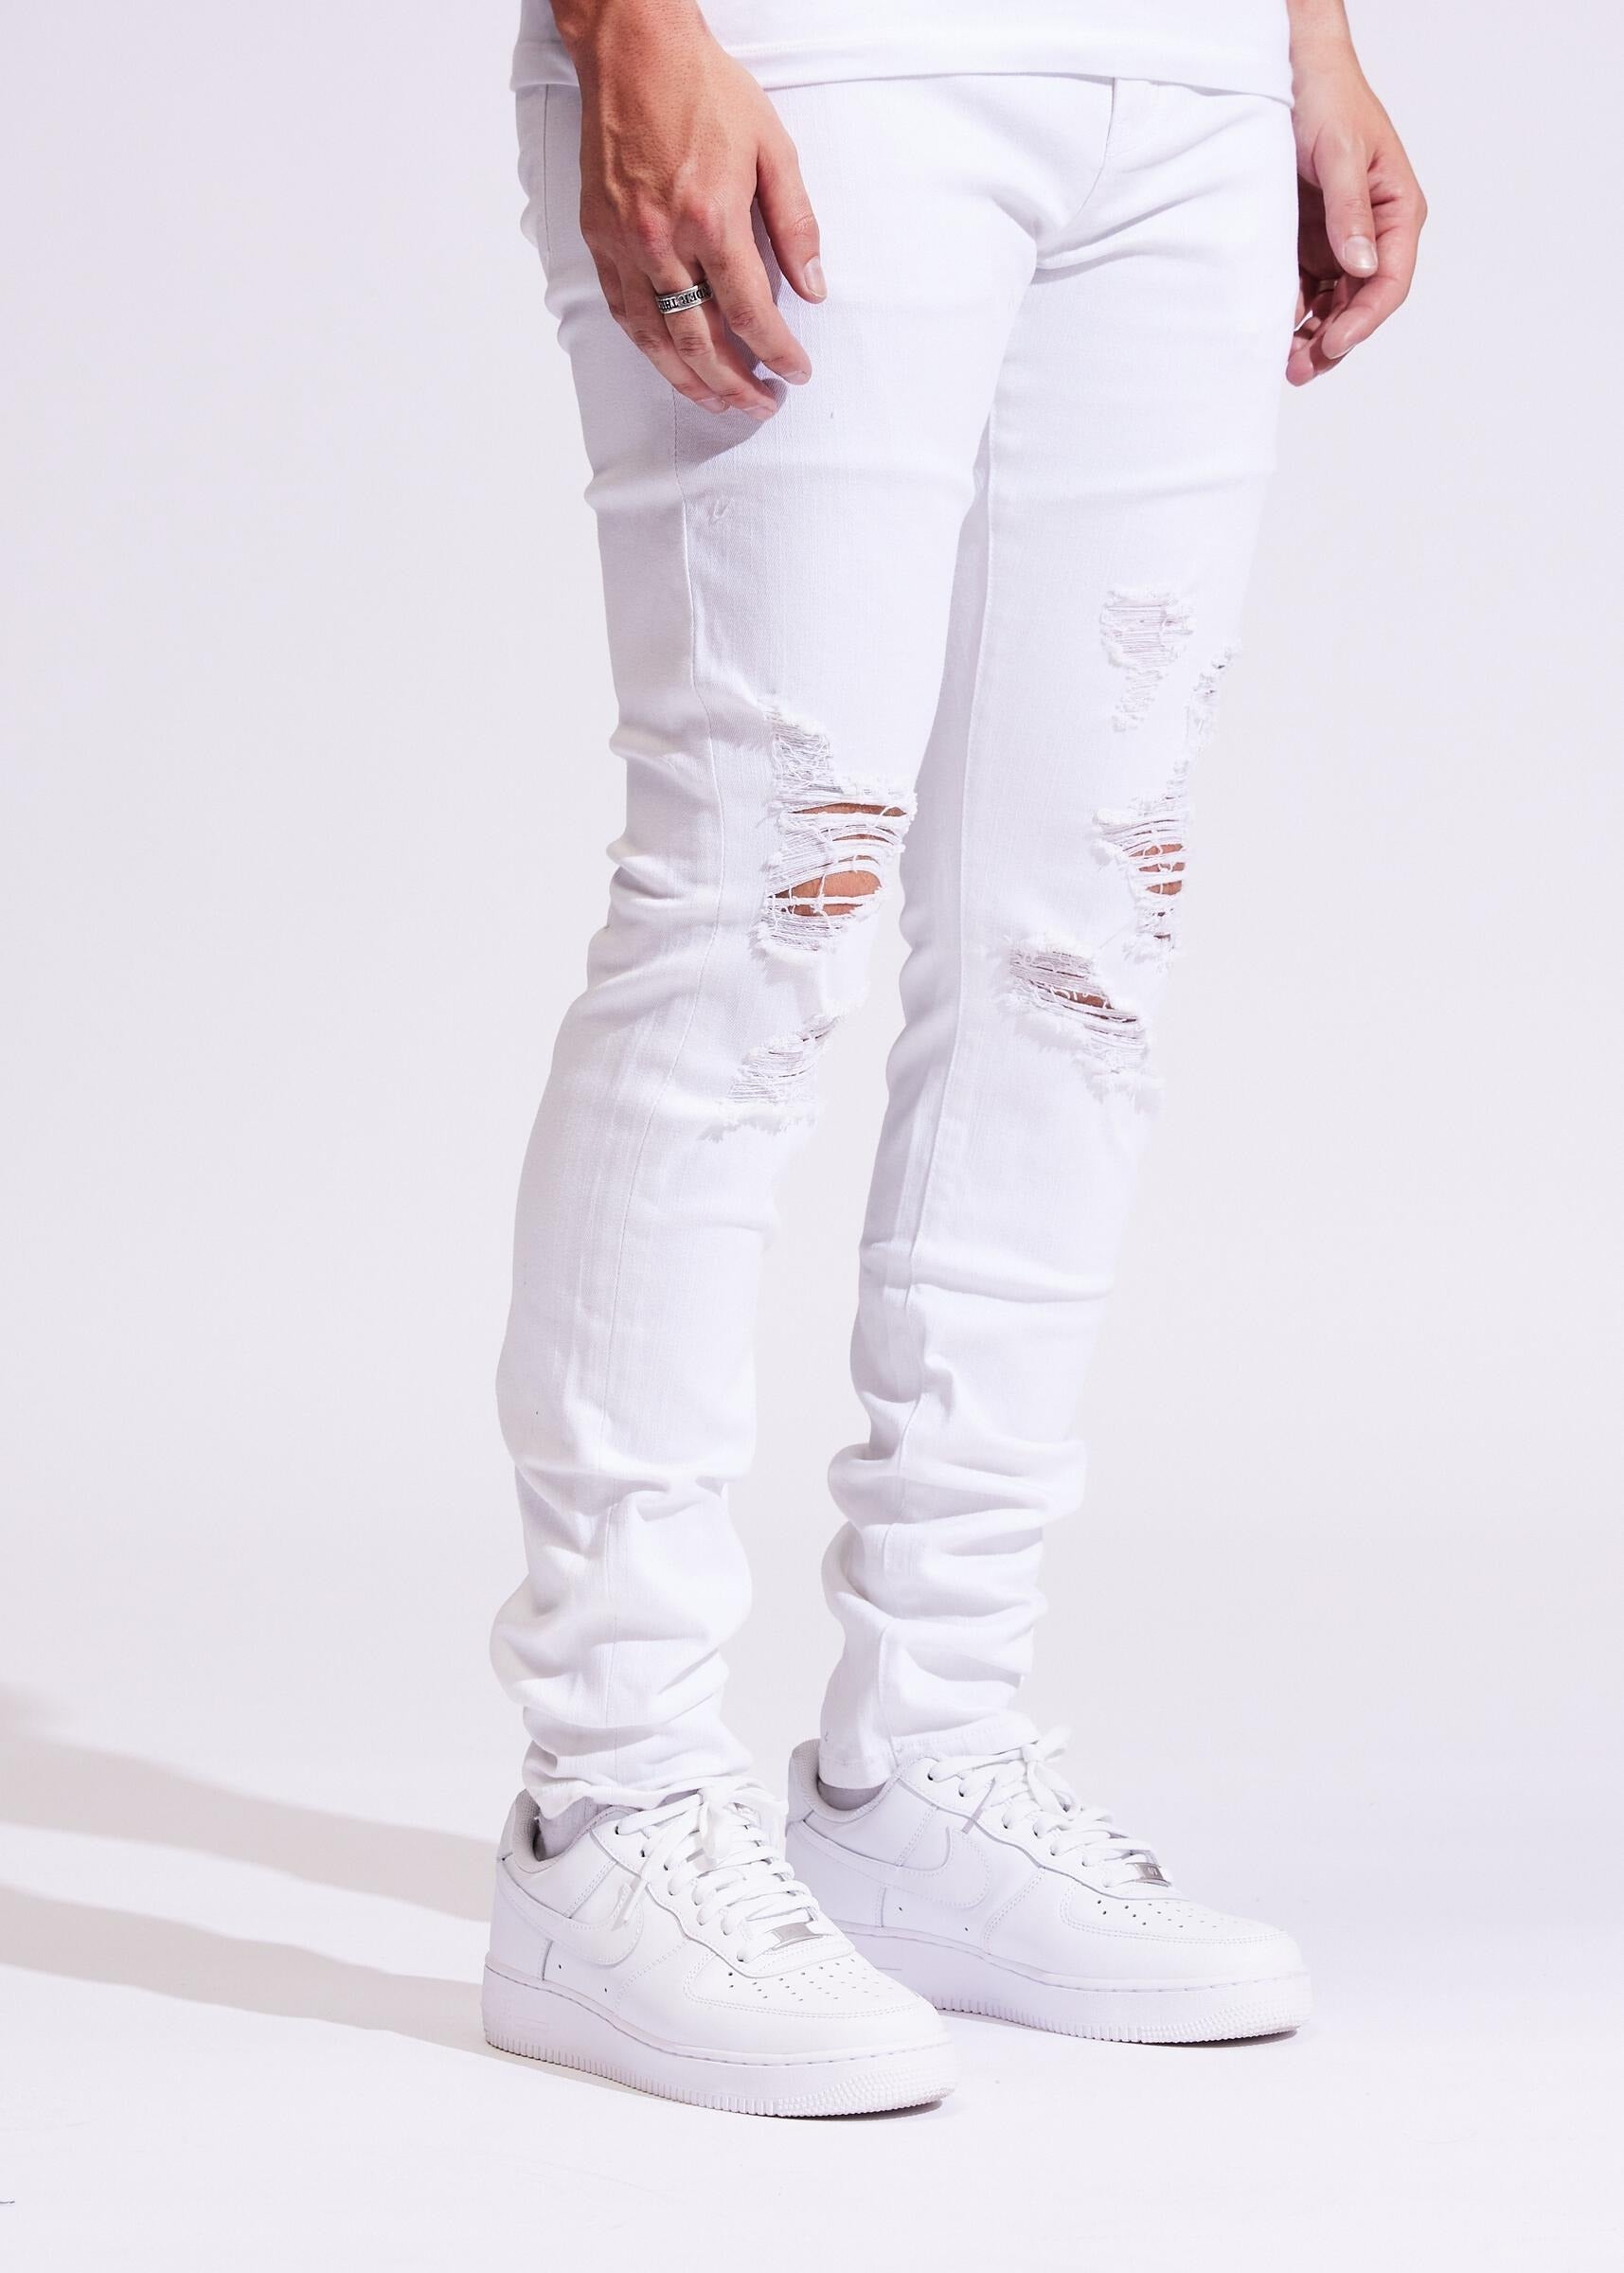 Crysp Denim Jeans - Atlantic (White)